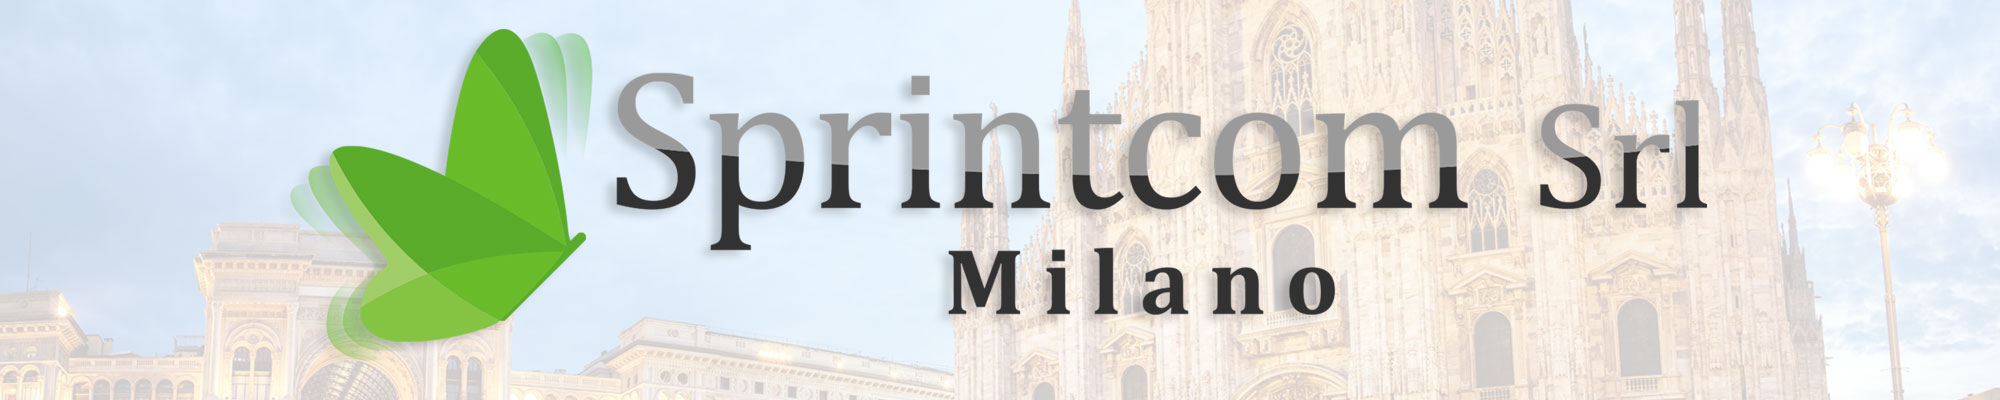 Sprintcom Srl - Milano